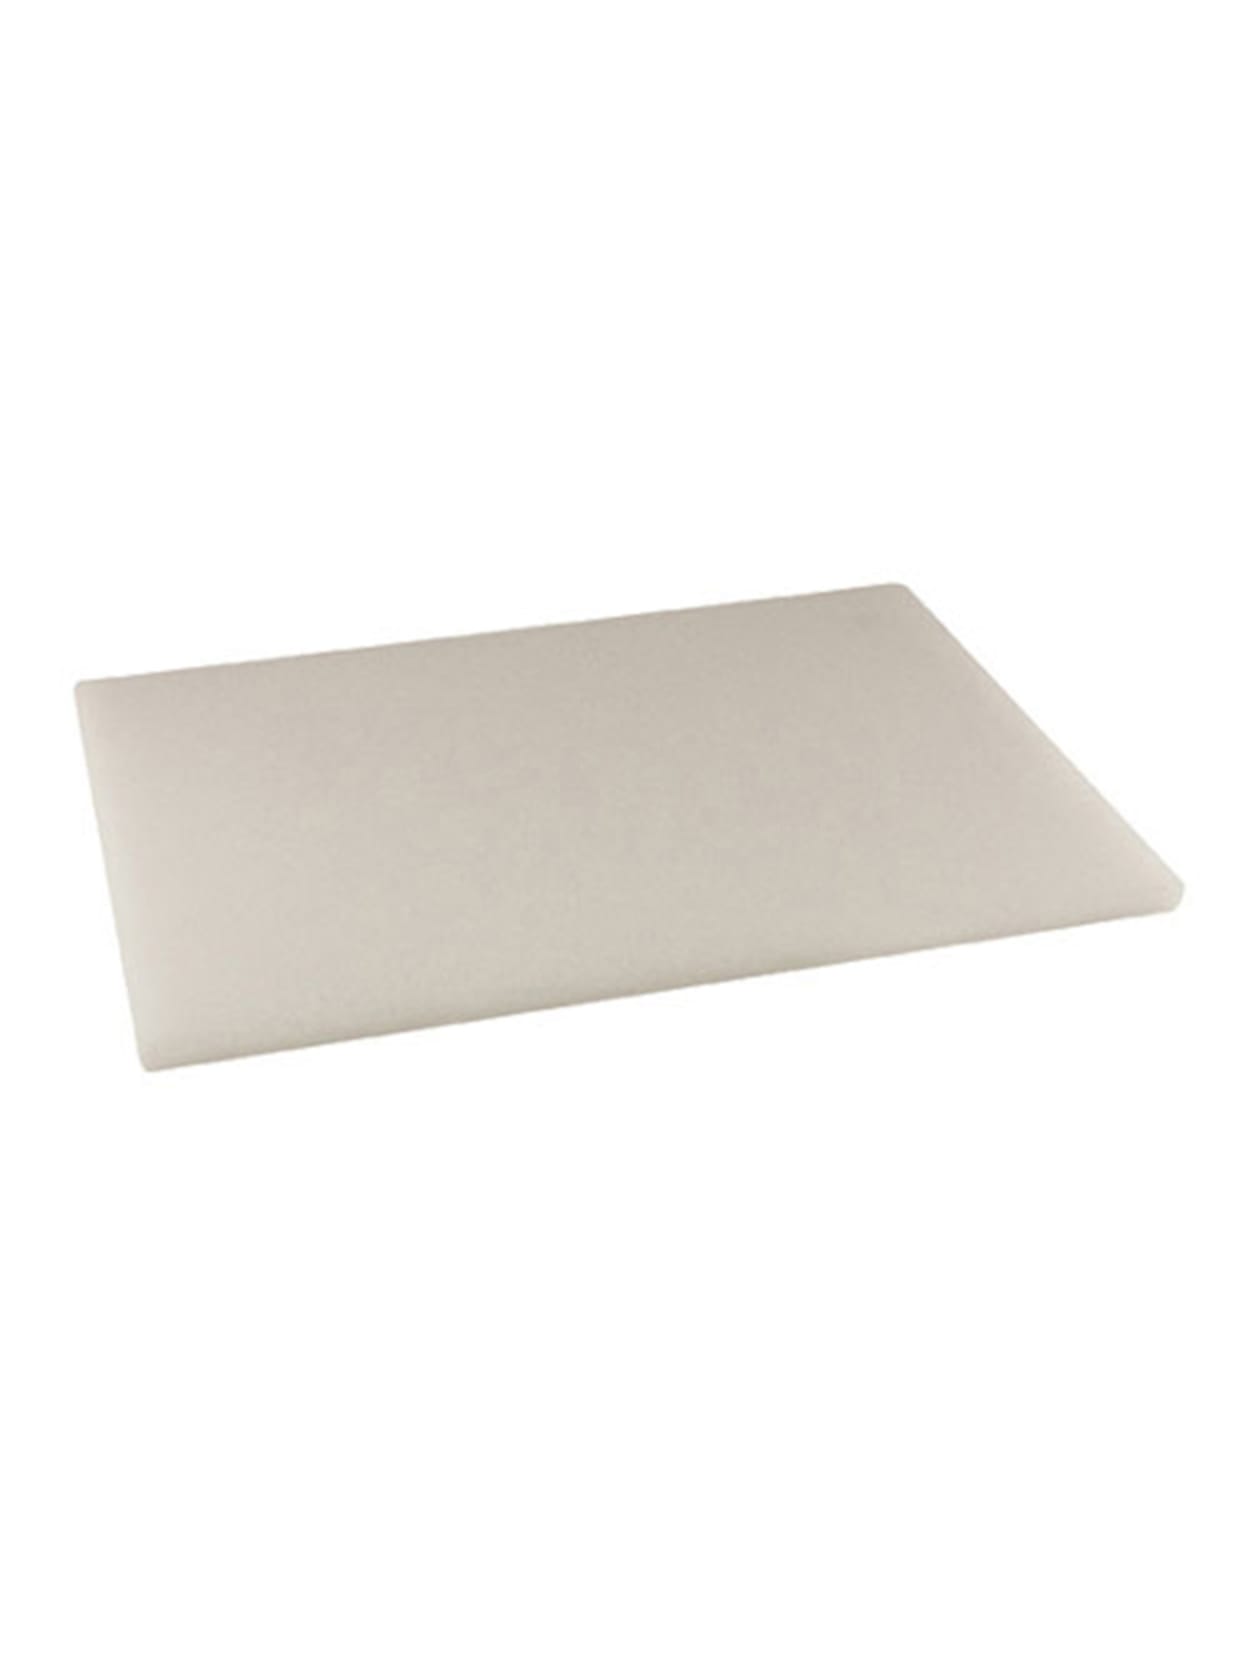 plastic cutting board material